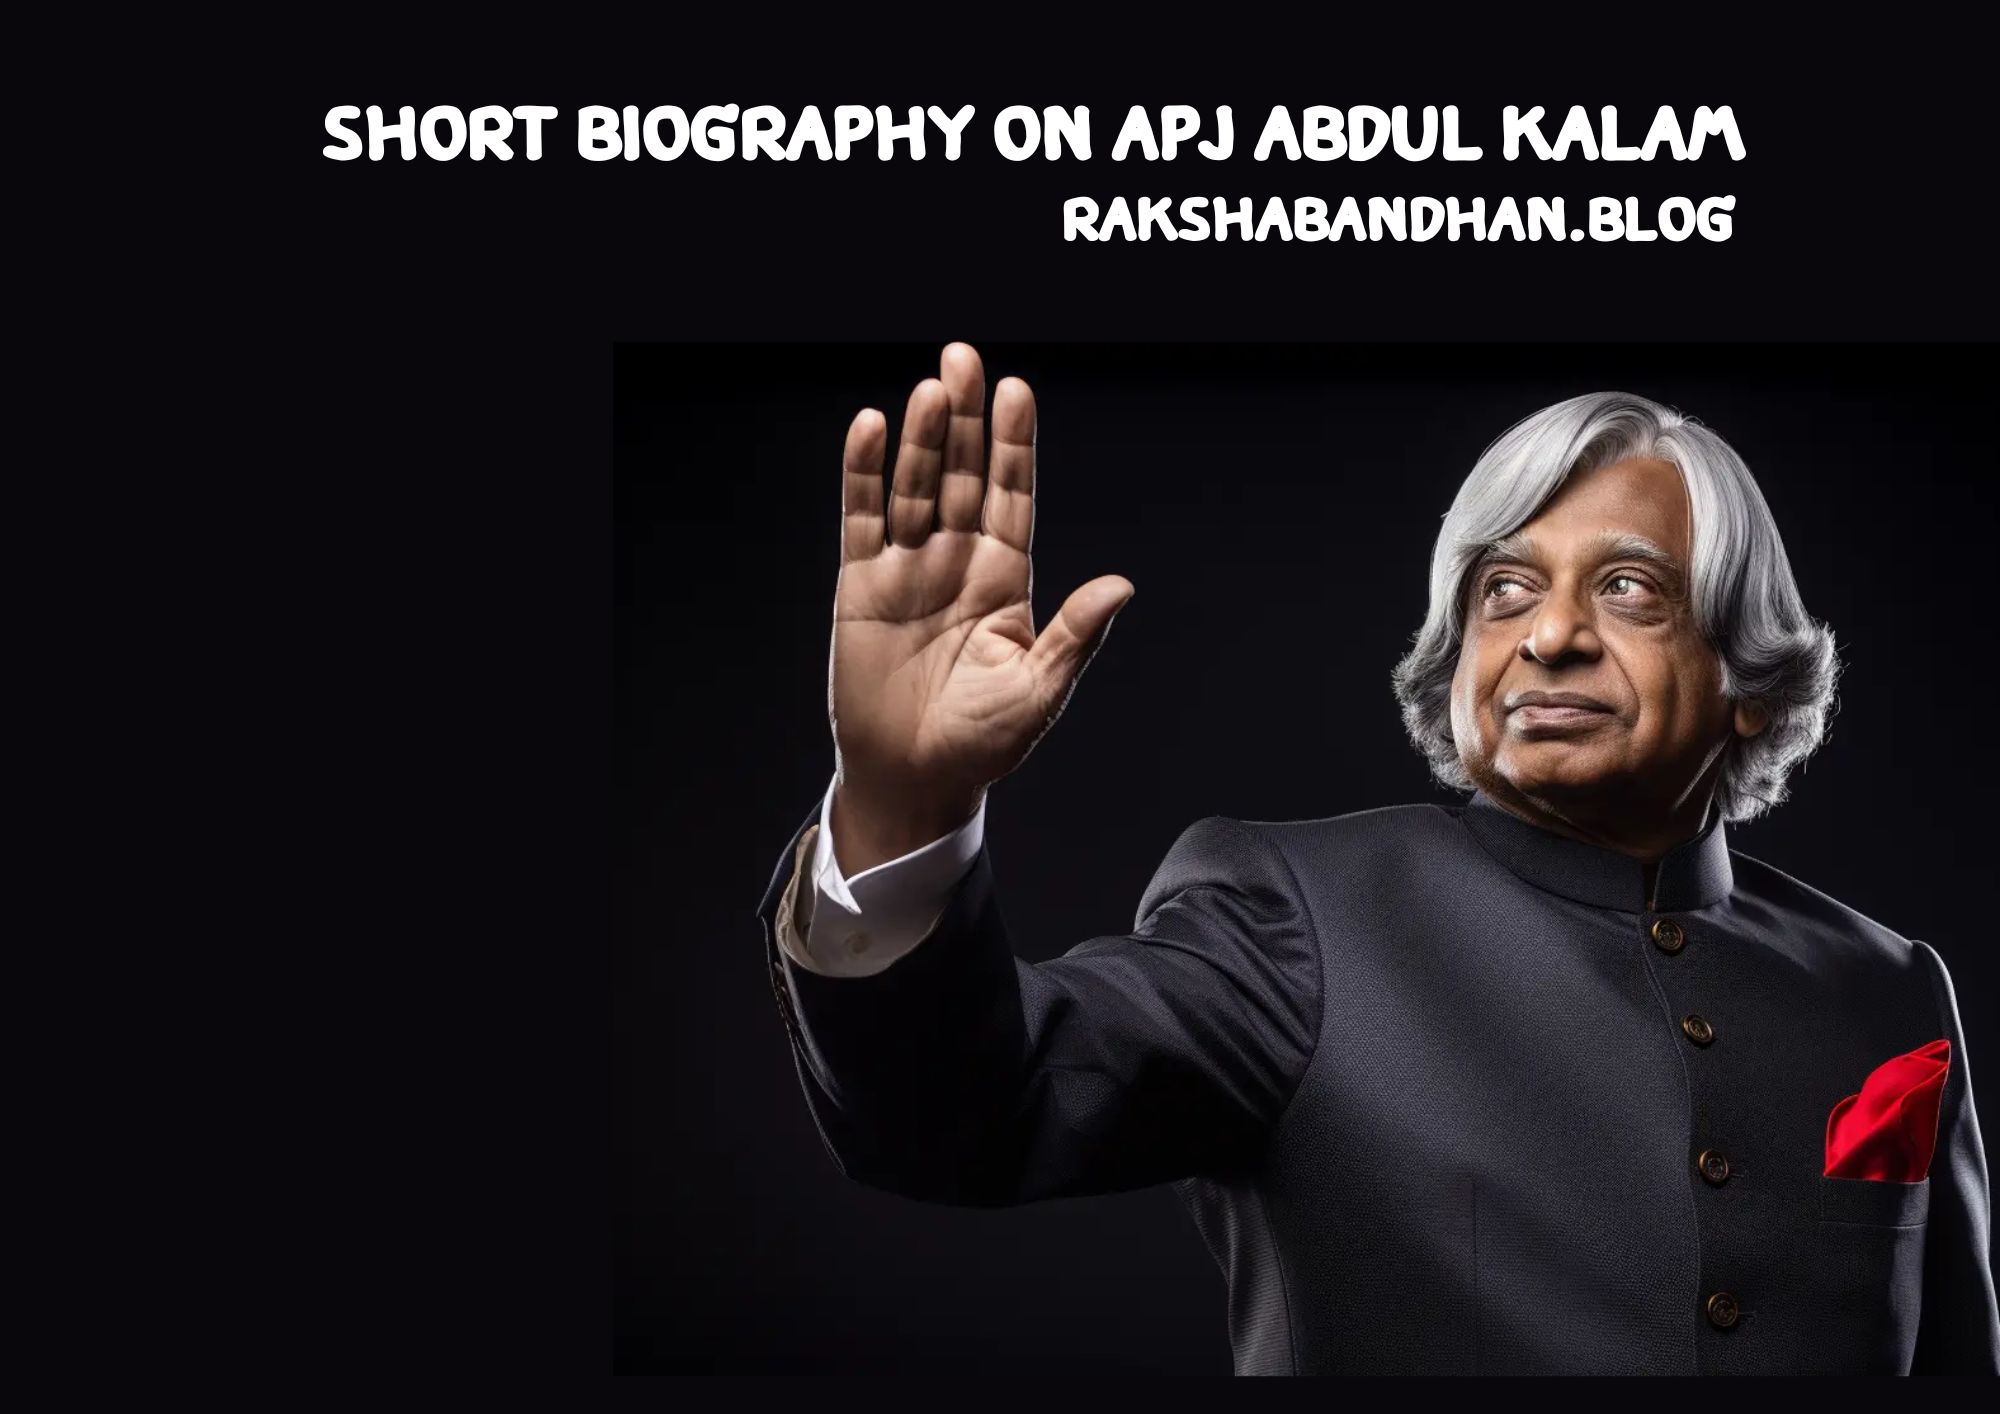 Short Biography On APJ Abdul Kalam In English (Short Biography Of APJ Abdul Kalam In English)